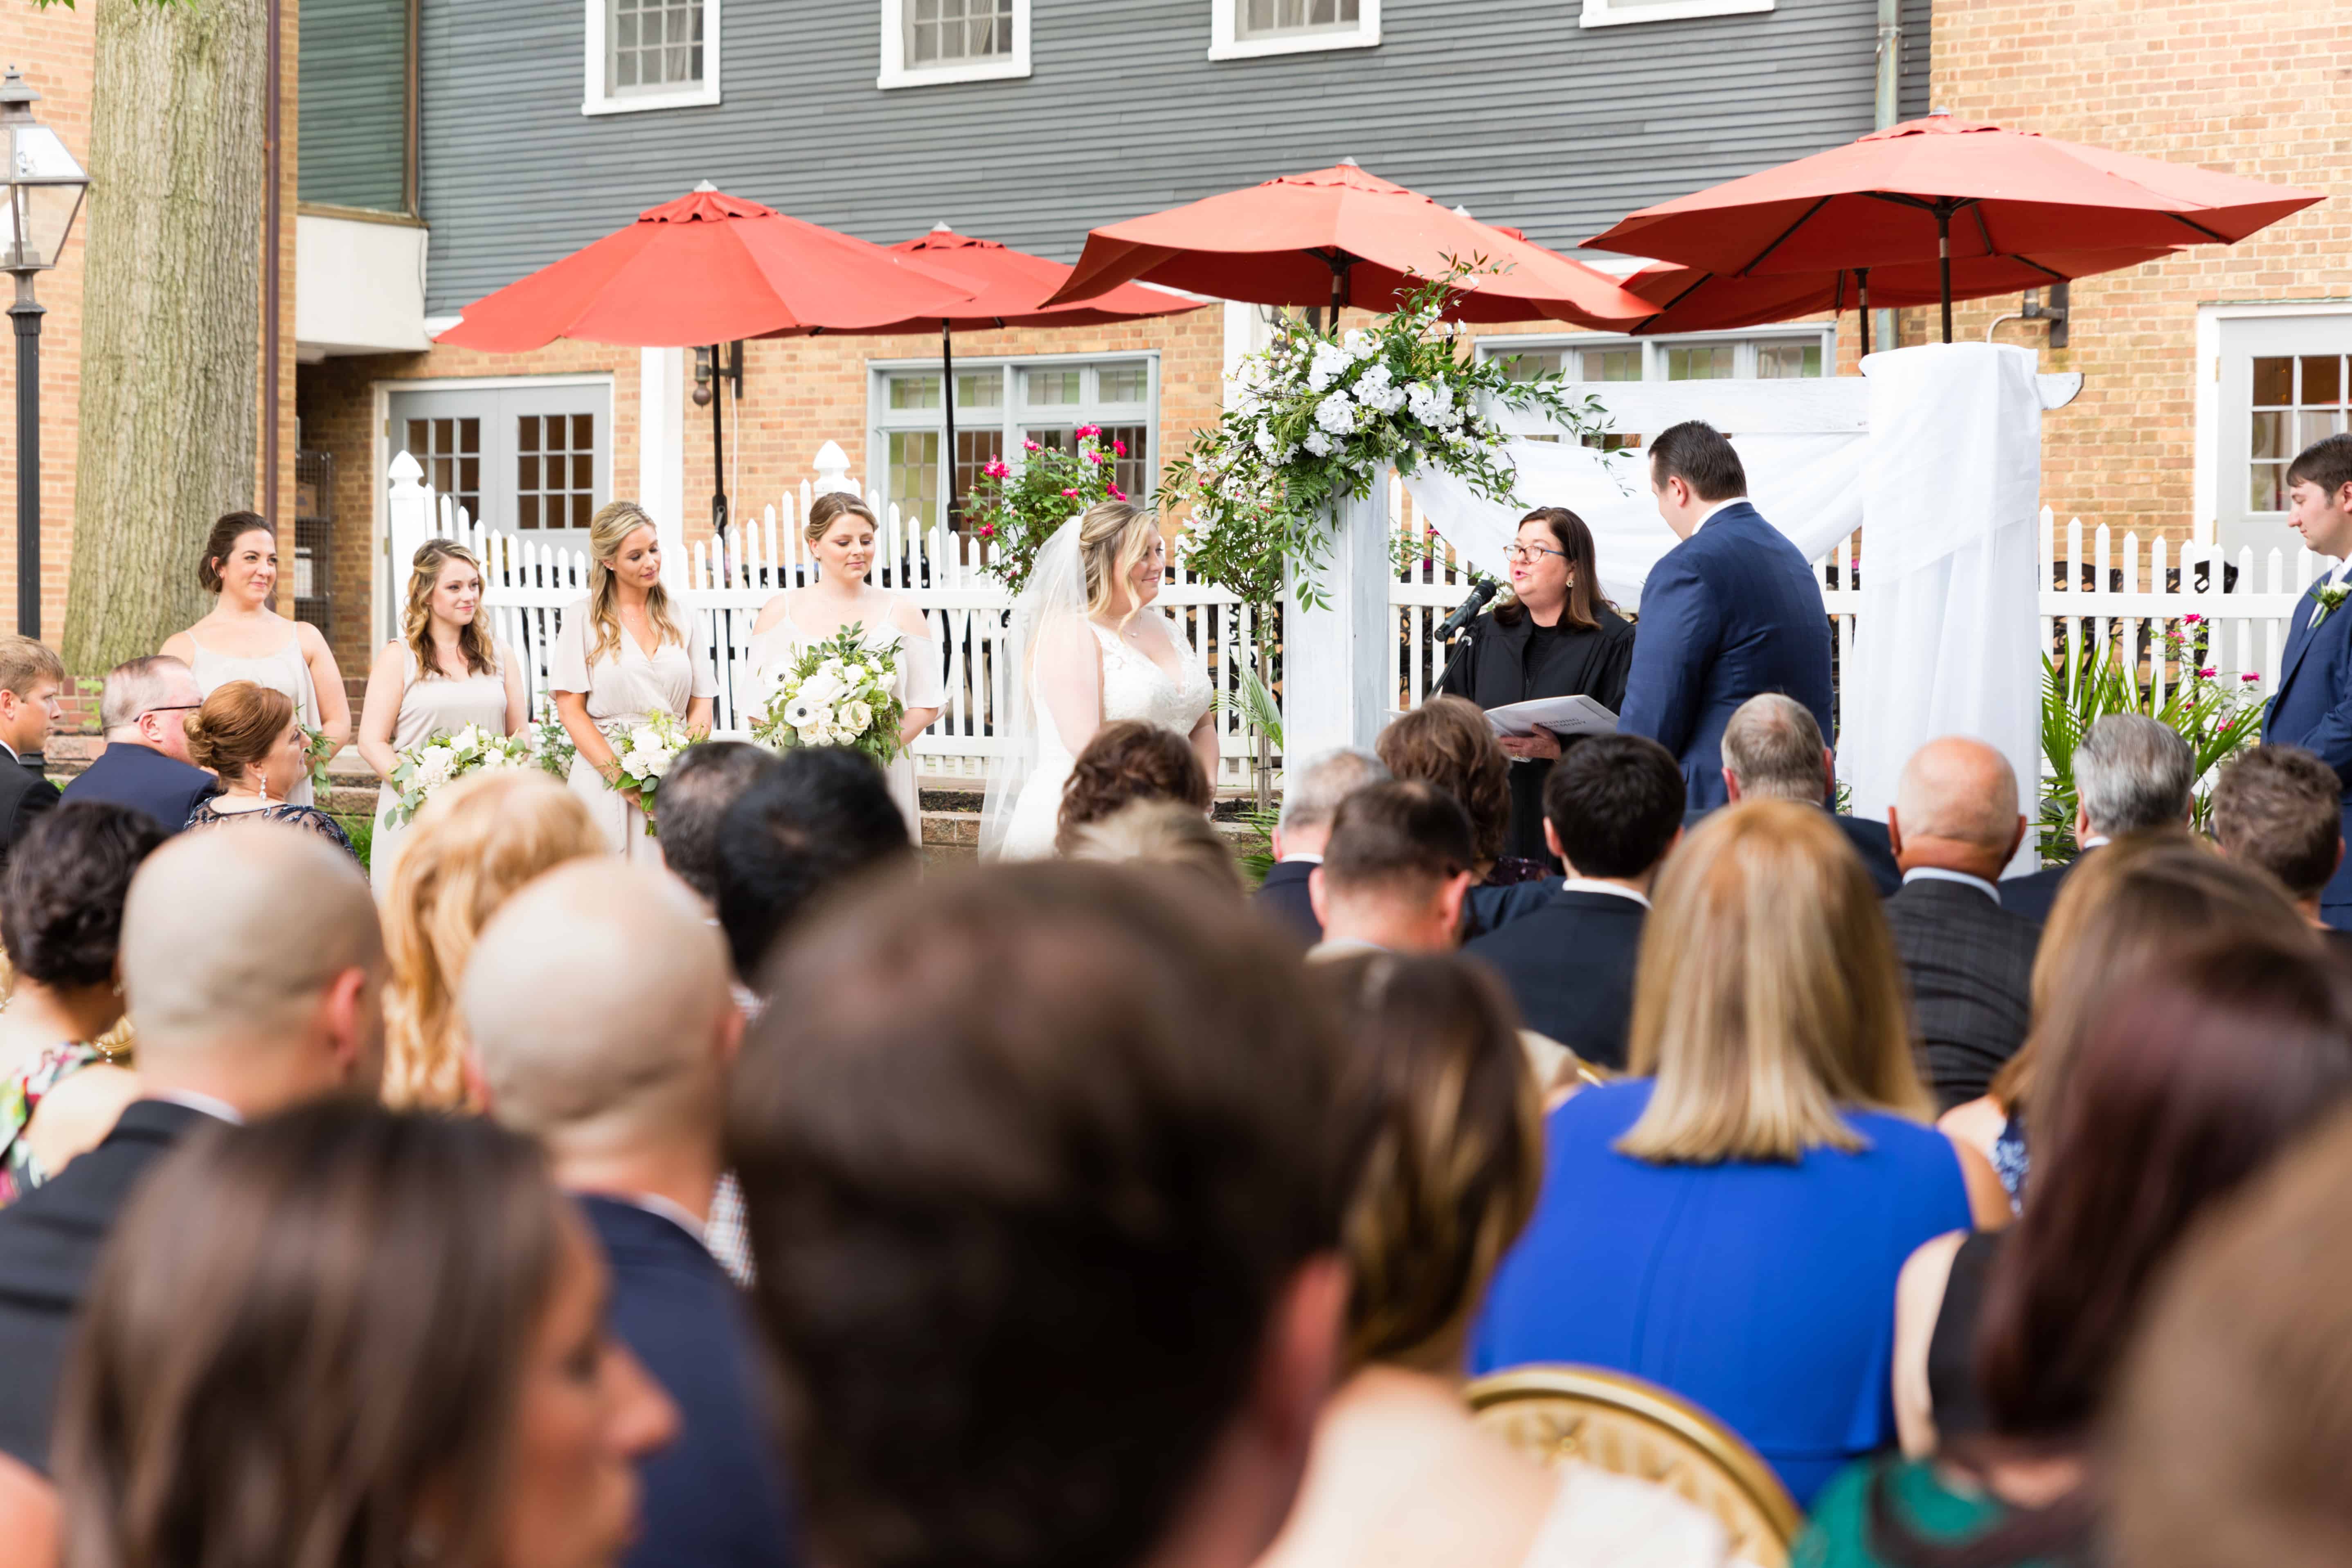 Outdoor back patio wedding at Nassau Inn in Princeton, NJ